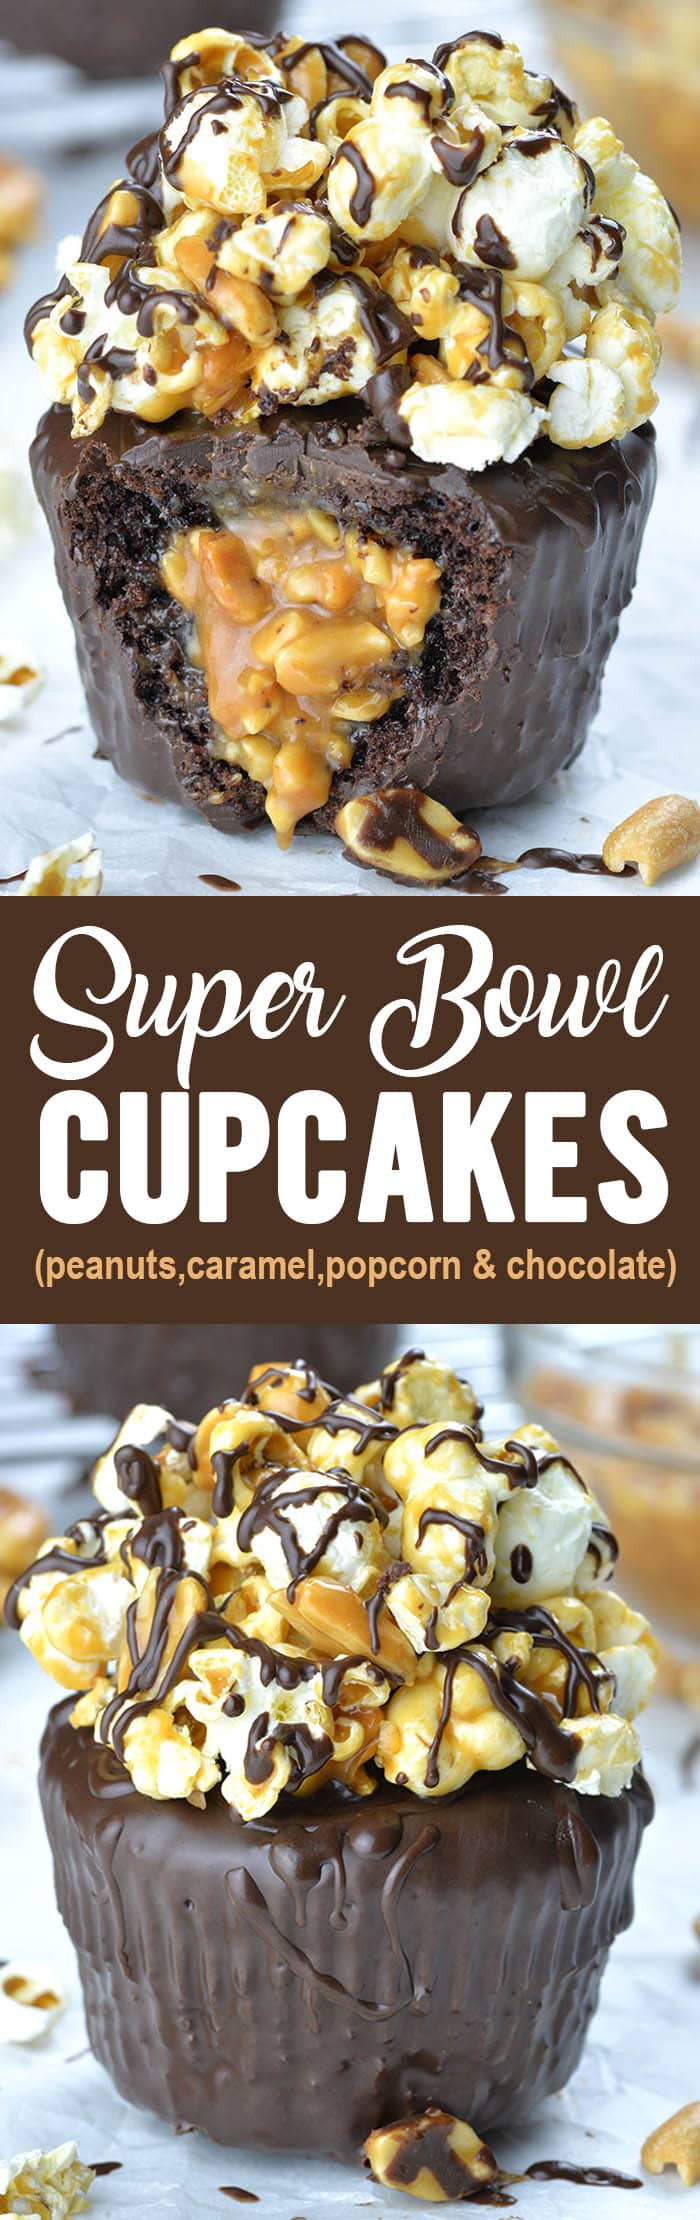 Super Bowl Cupcakes
 Super Bowl Cupcakes OMG Chocolate Desserts